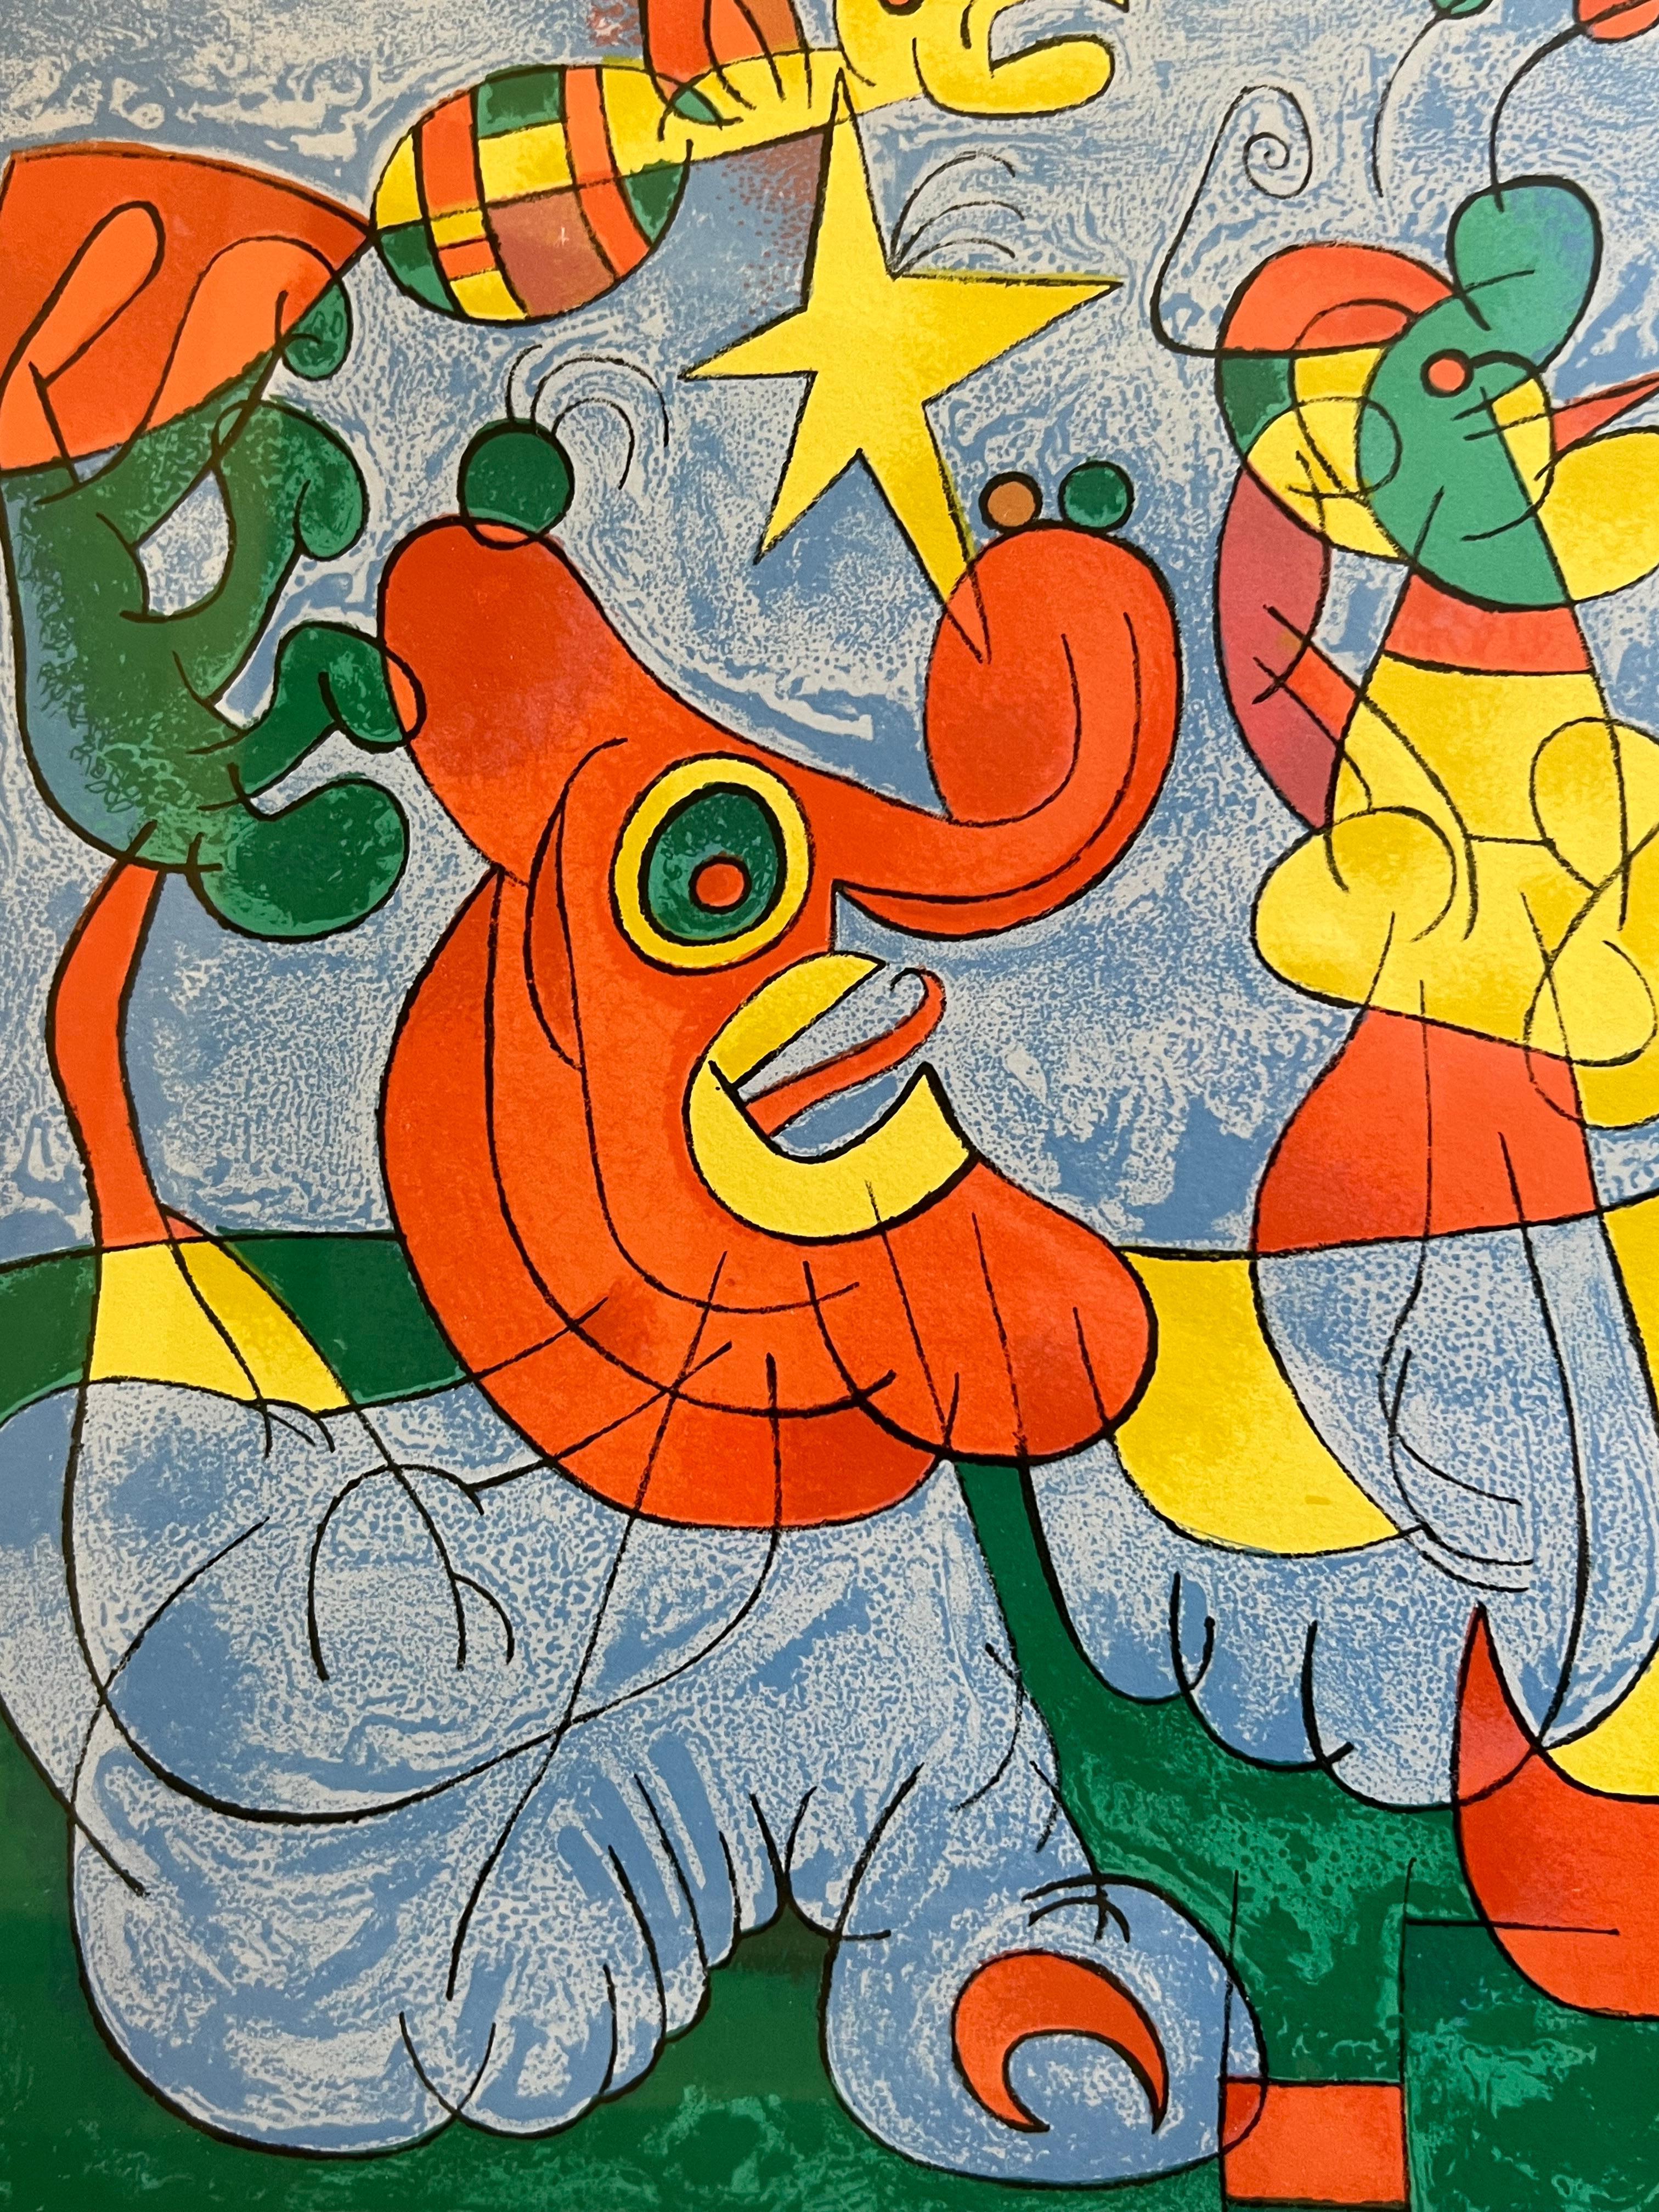 Large 1966 SURREAL Joan Miro Ubu roi (King Ubu): plate 3 LITHOGRAPH Colored - Surrealist Print by Joan Miró